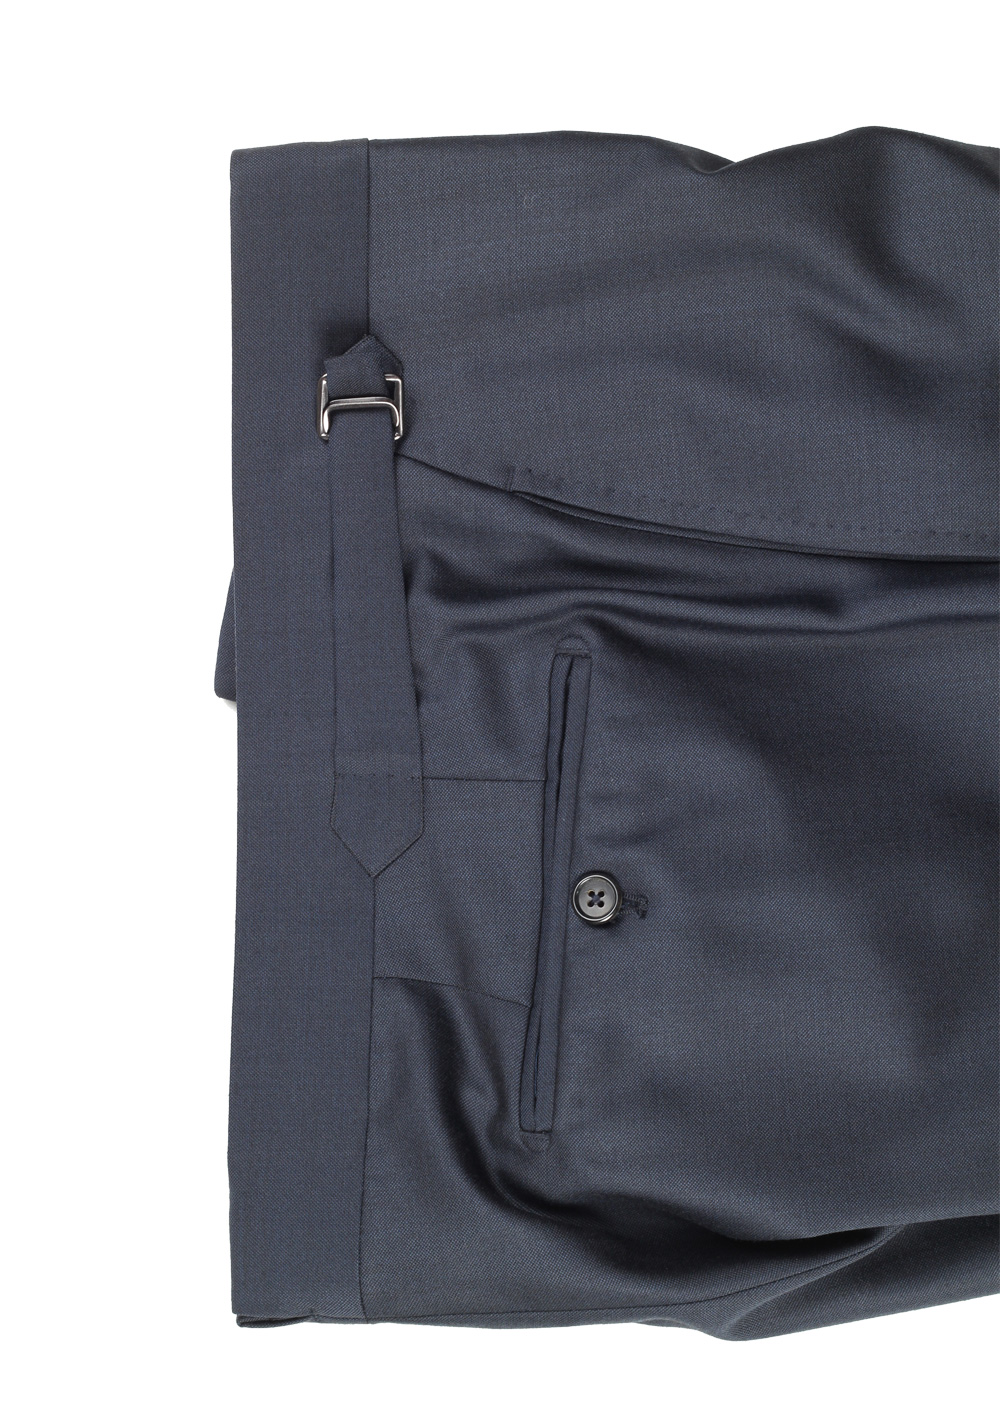 TOM FORD Windsor Blue Suit 3 Piece Size 60 / 50R U.S. Wool Fit A | Costume Limité